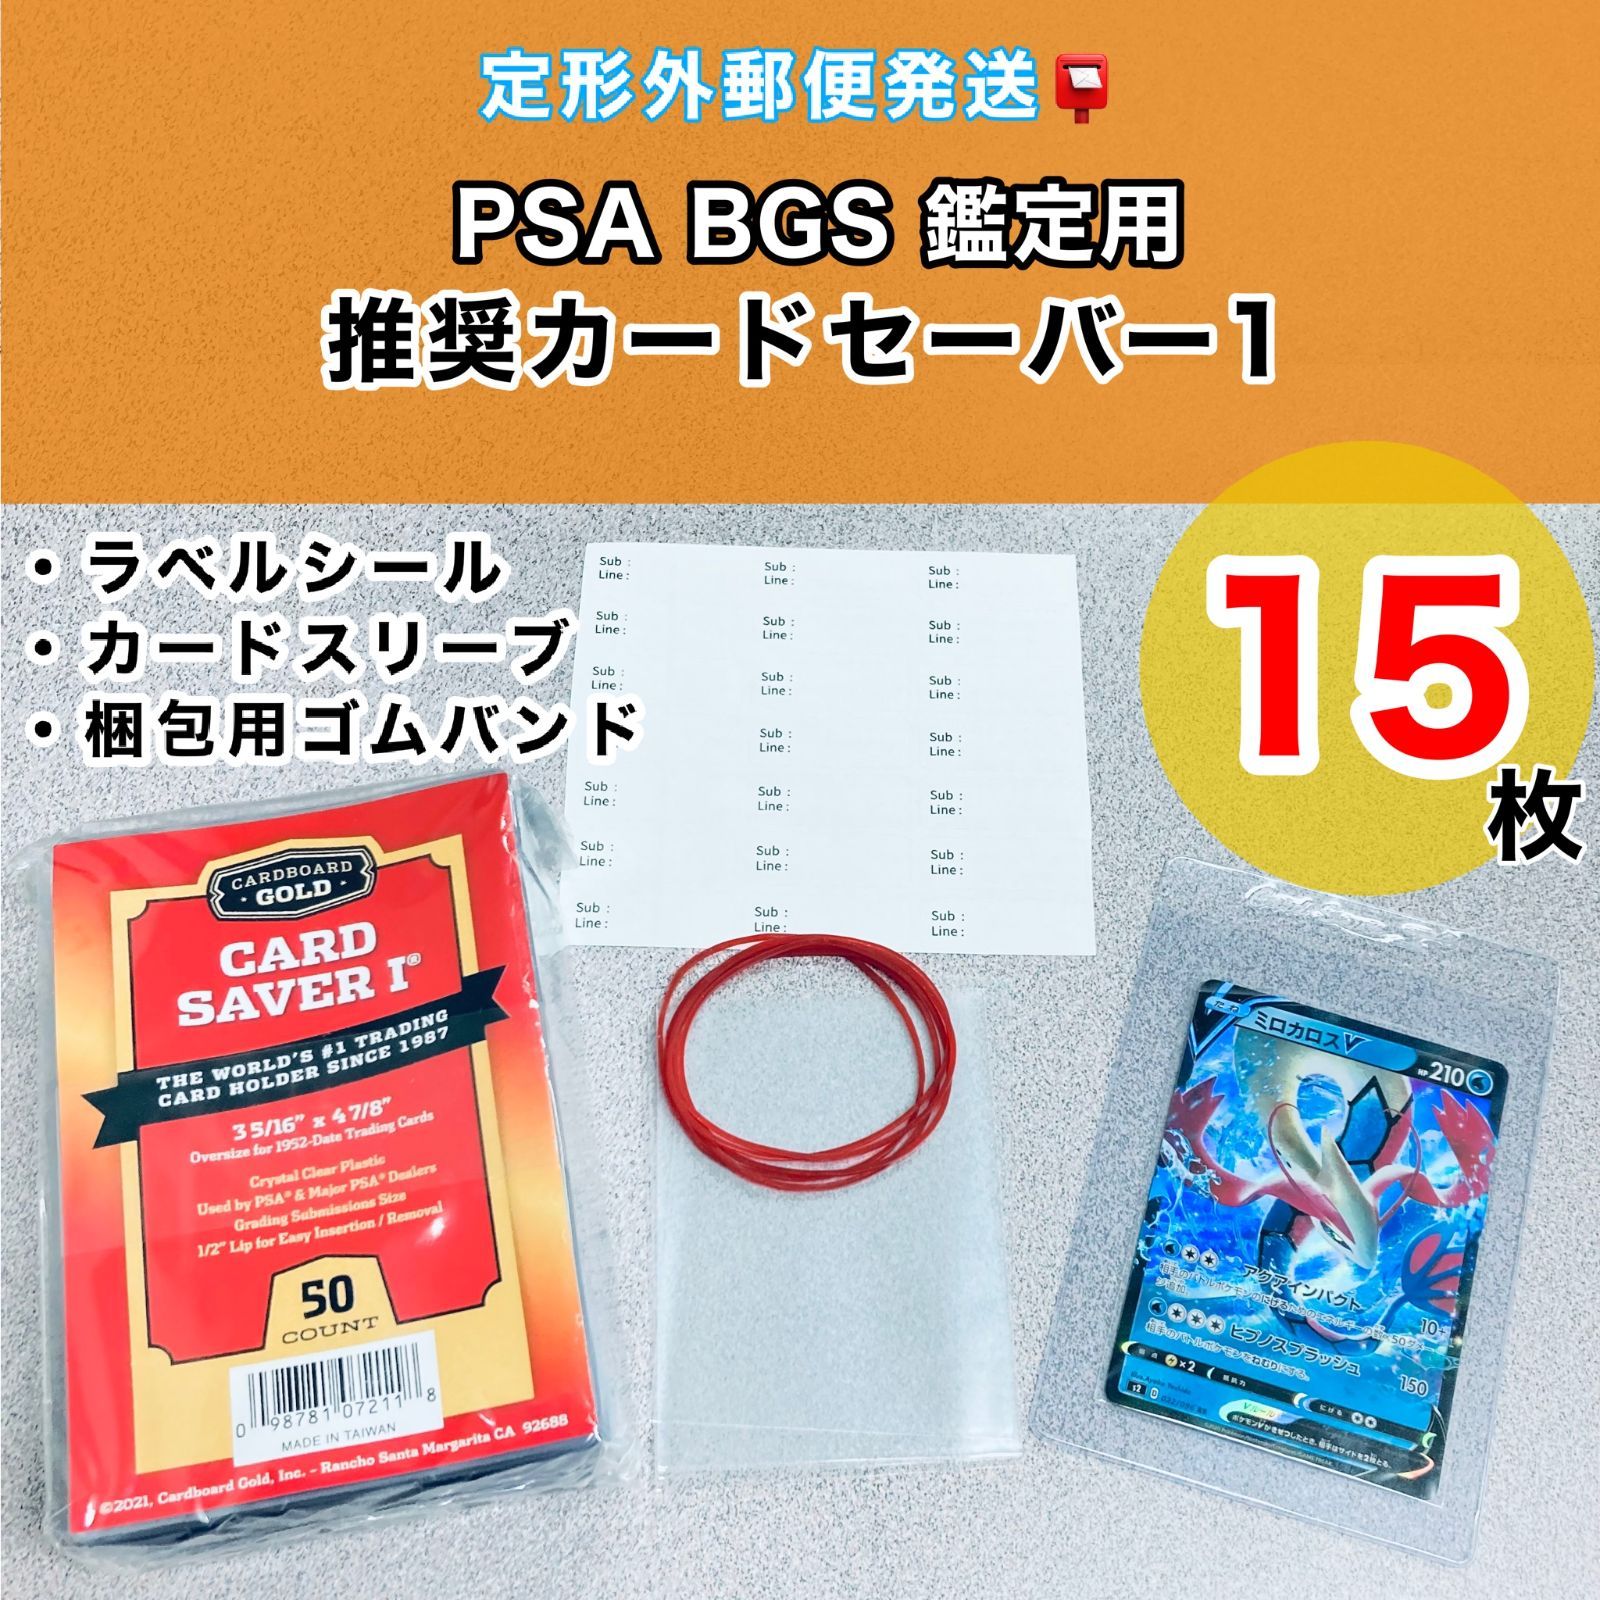 Cardboard Gold カードセーバー Card Saver PSA 鑑定 カード スリーブ ウルトラプロテクション